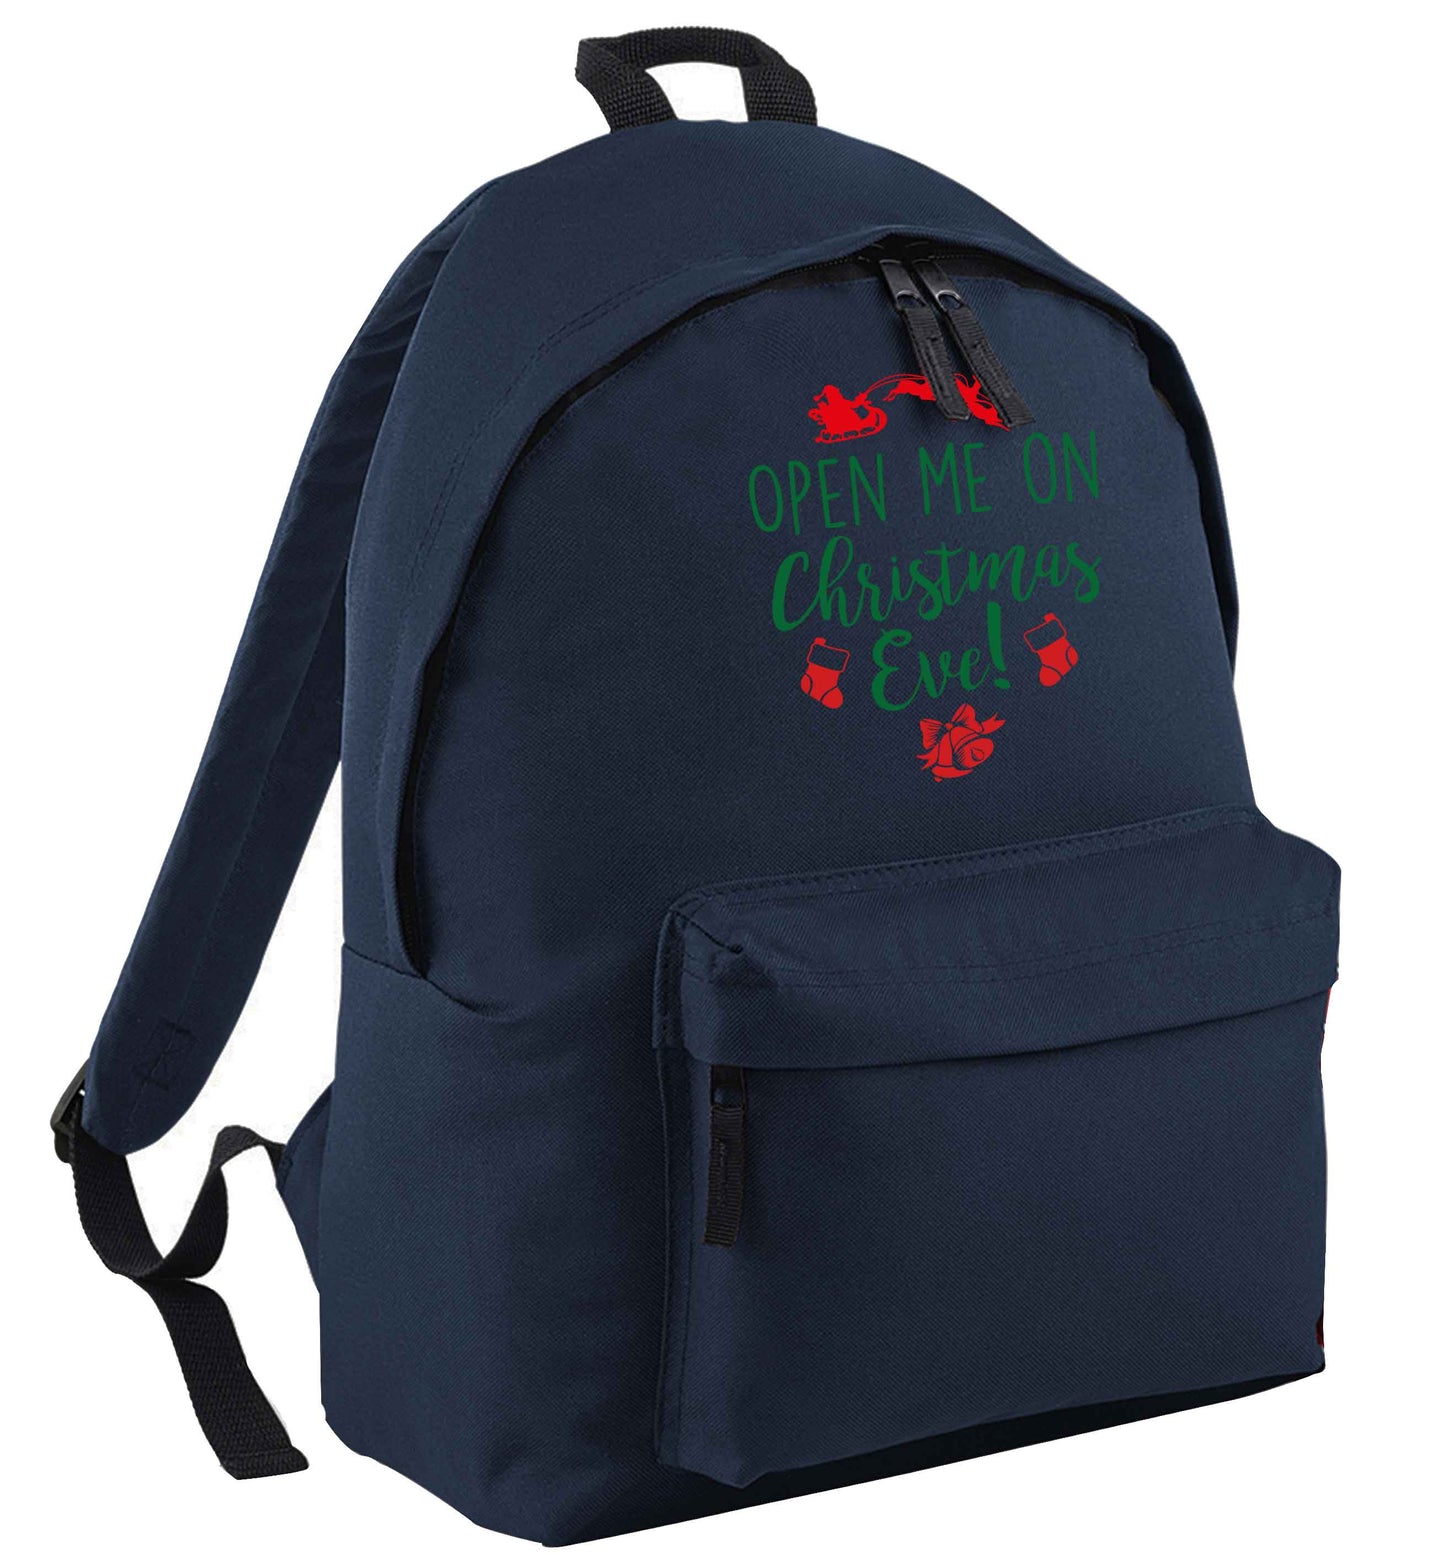 Open me on Christmas Day | Children's backpack